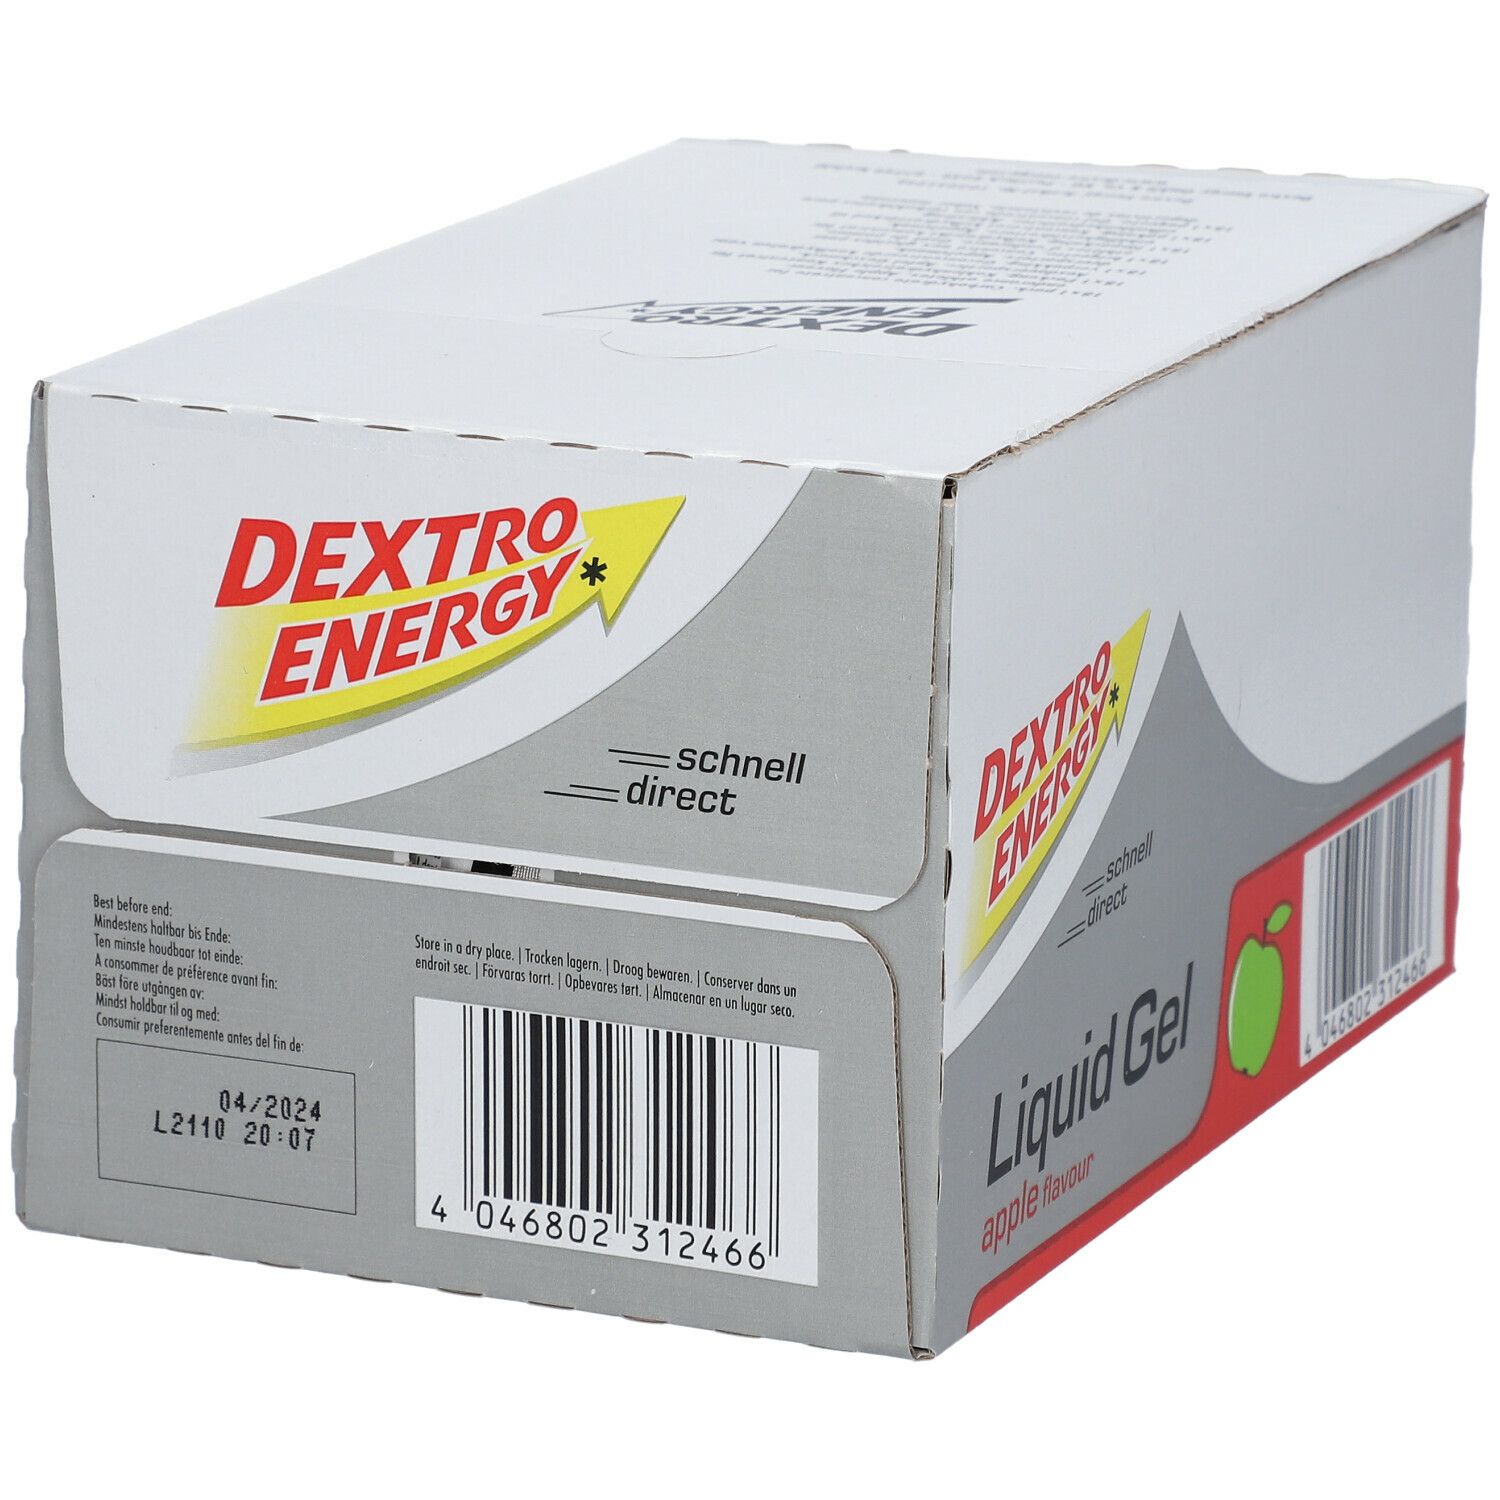 Dextro Energy Liquid Gel, Apfel